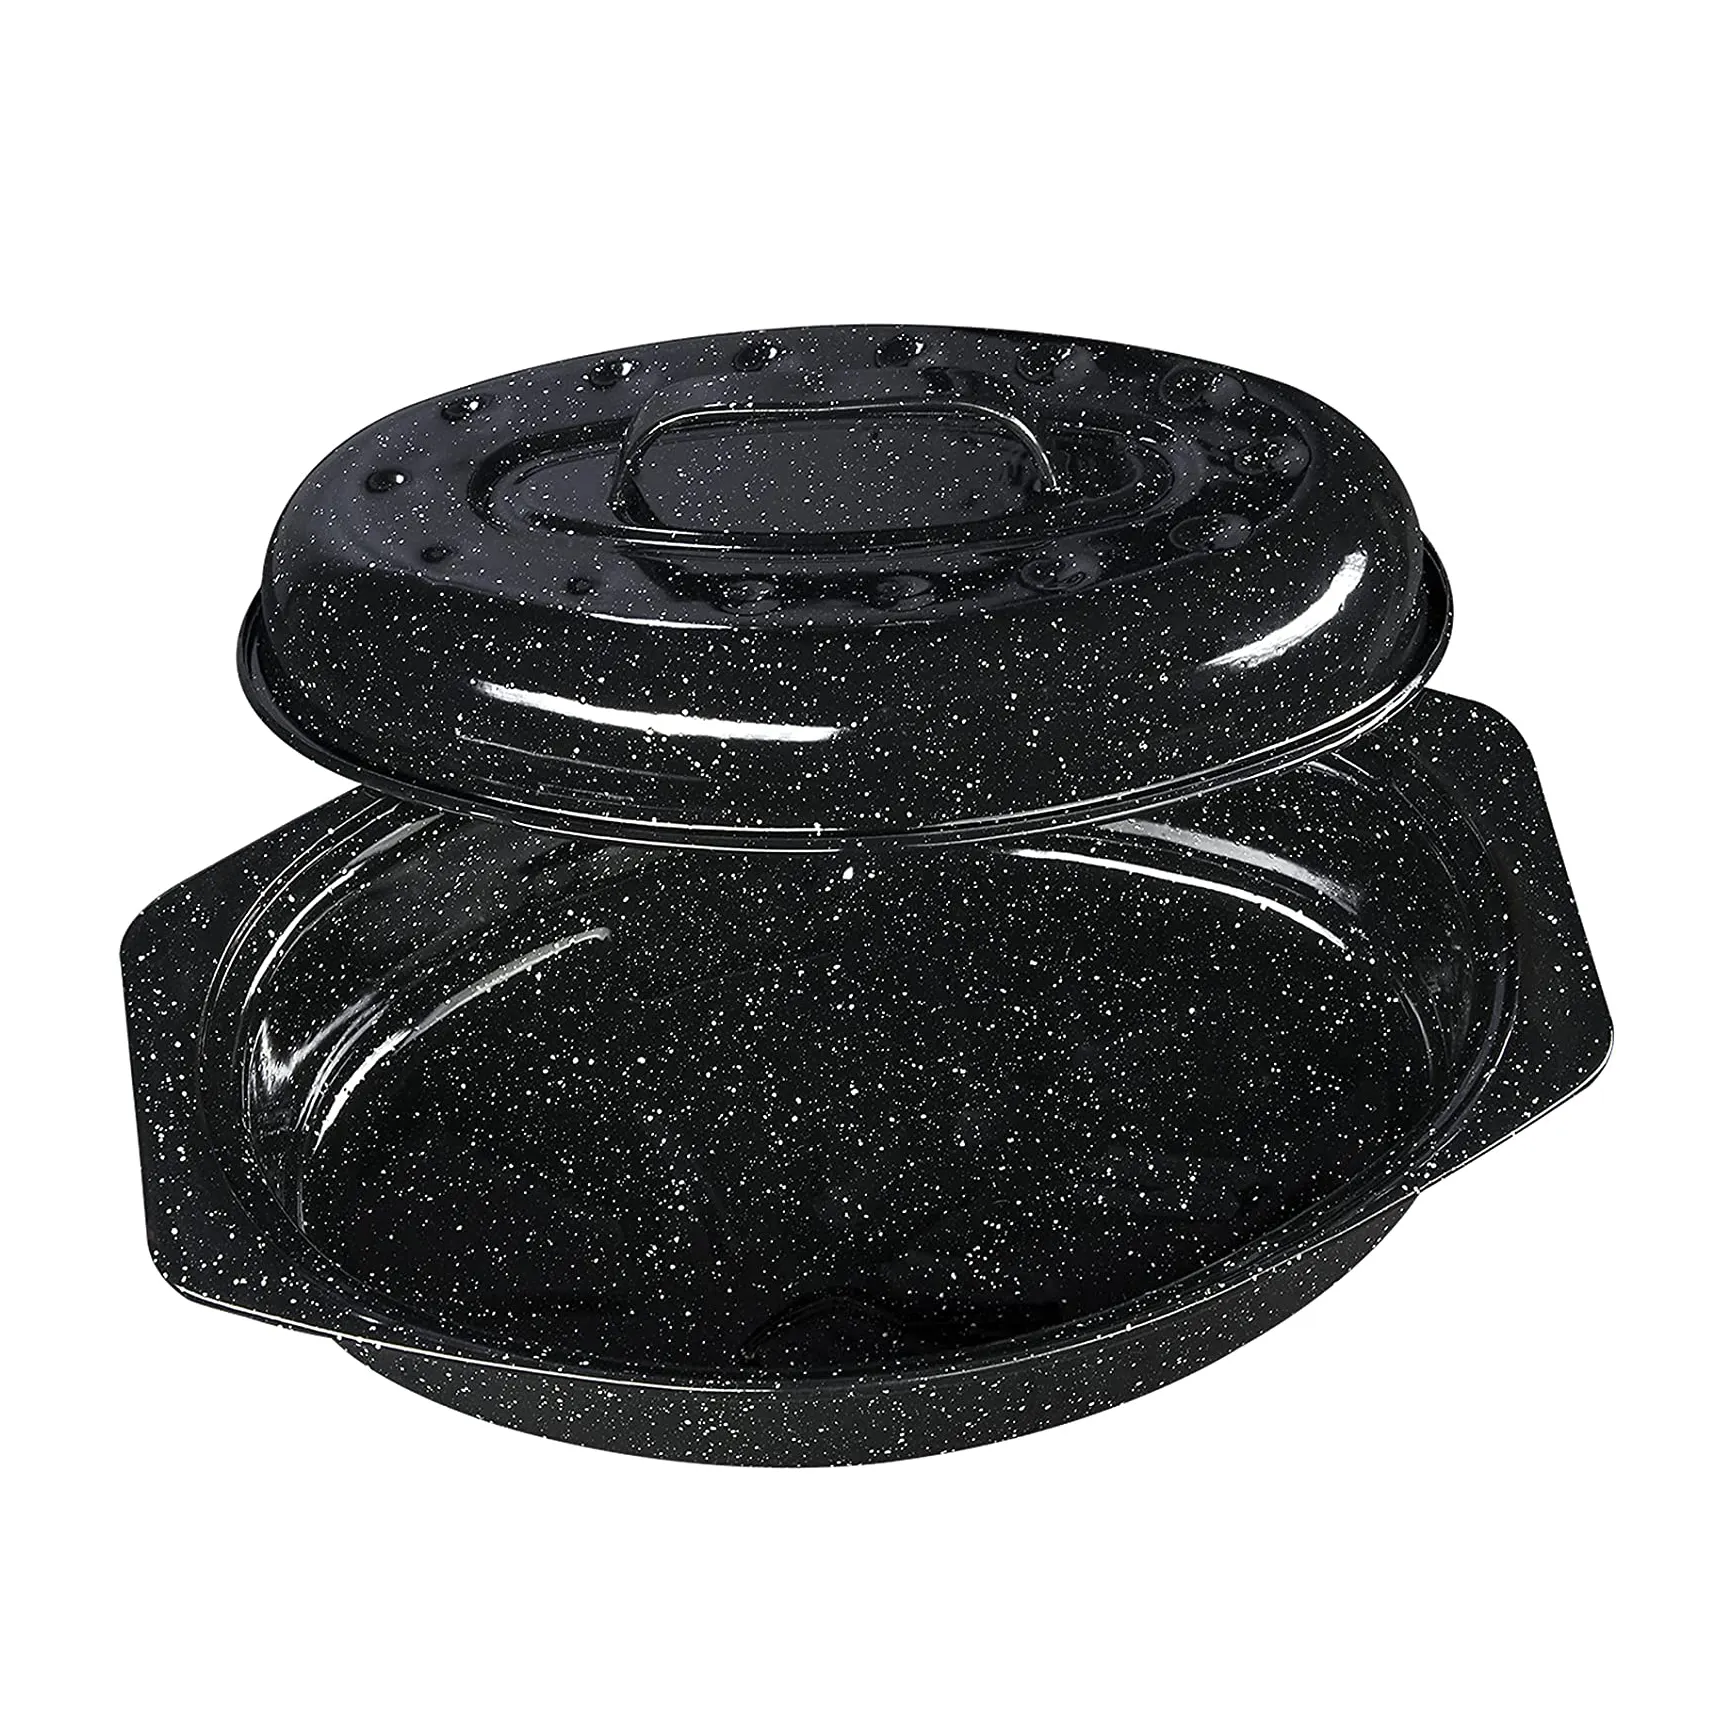 large Speckled Black enamel Nonstick Covered Oval easy clean oven baking pans carbon steel Roasting pan